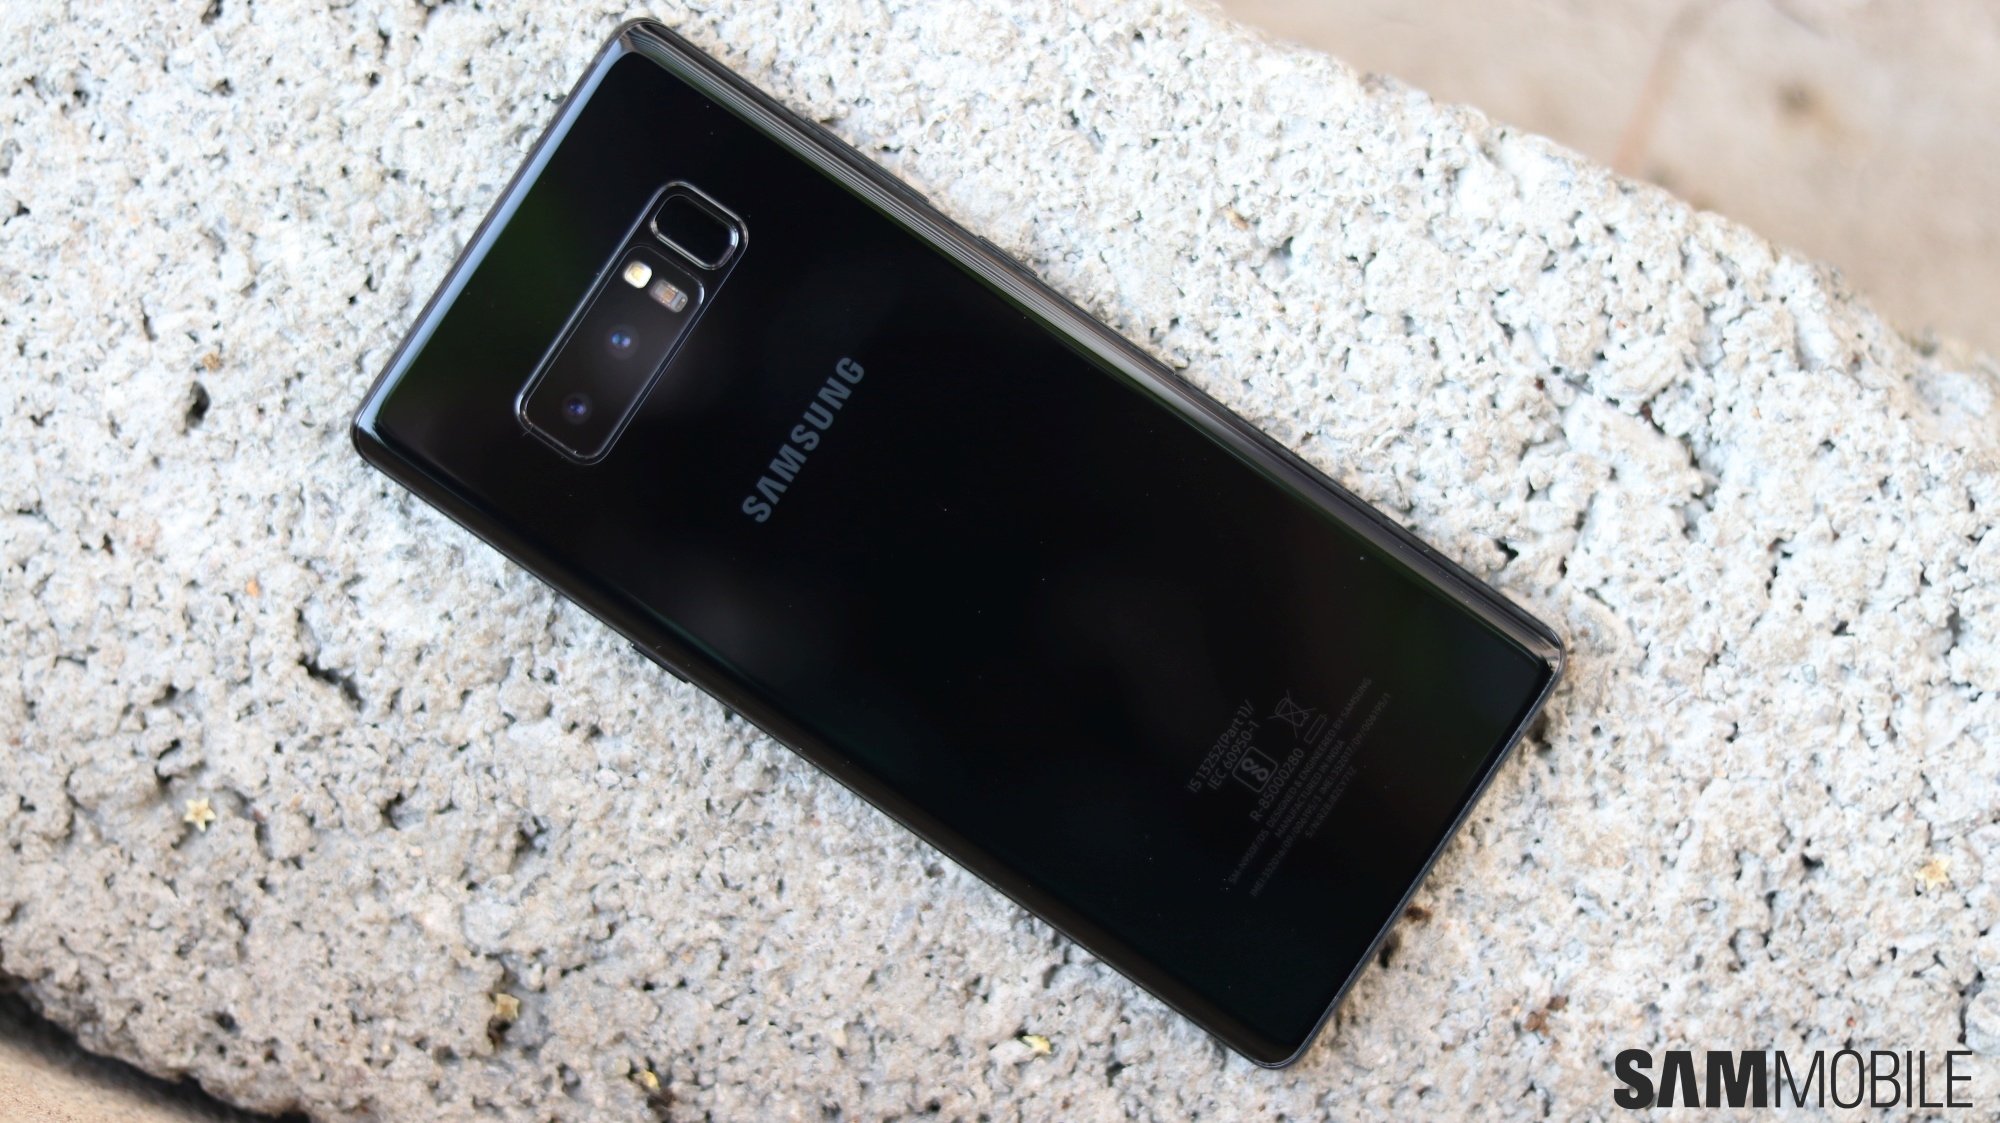 beroerte antwoord schakelaar Samsung Galaxy Note 8 - SamMobile